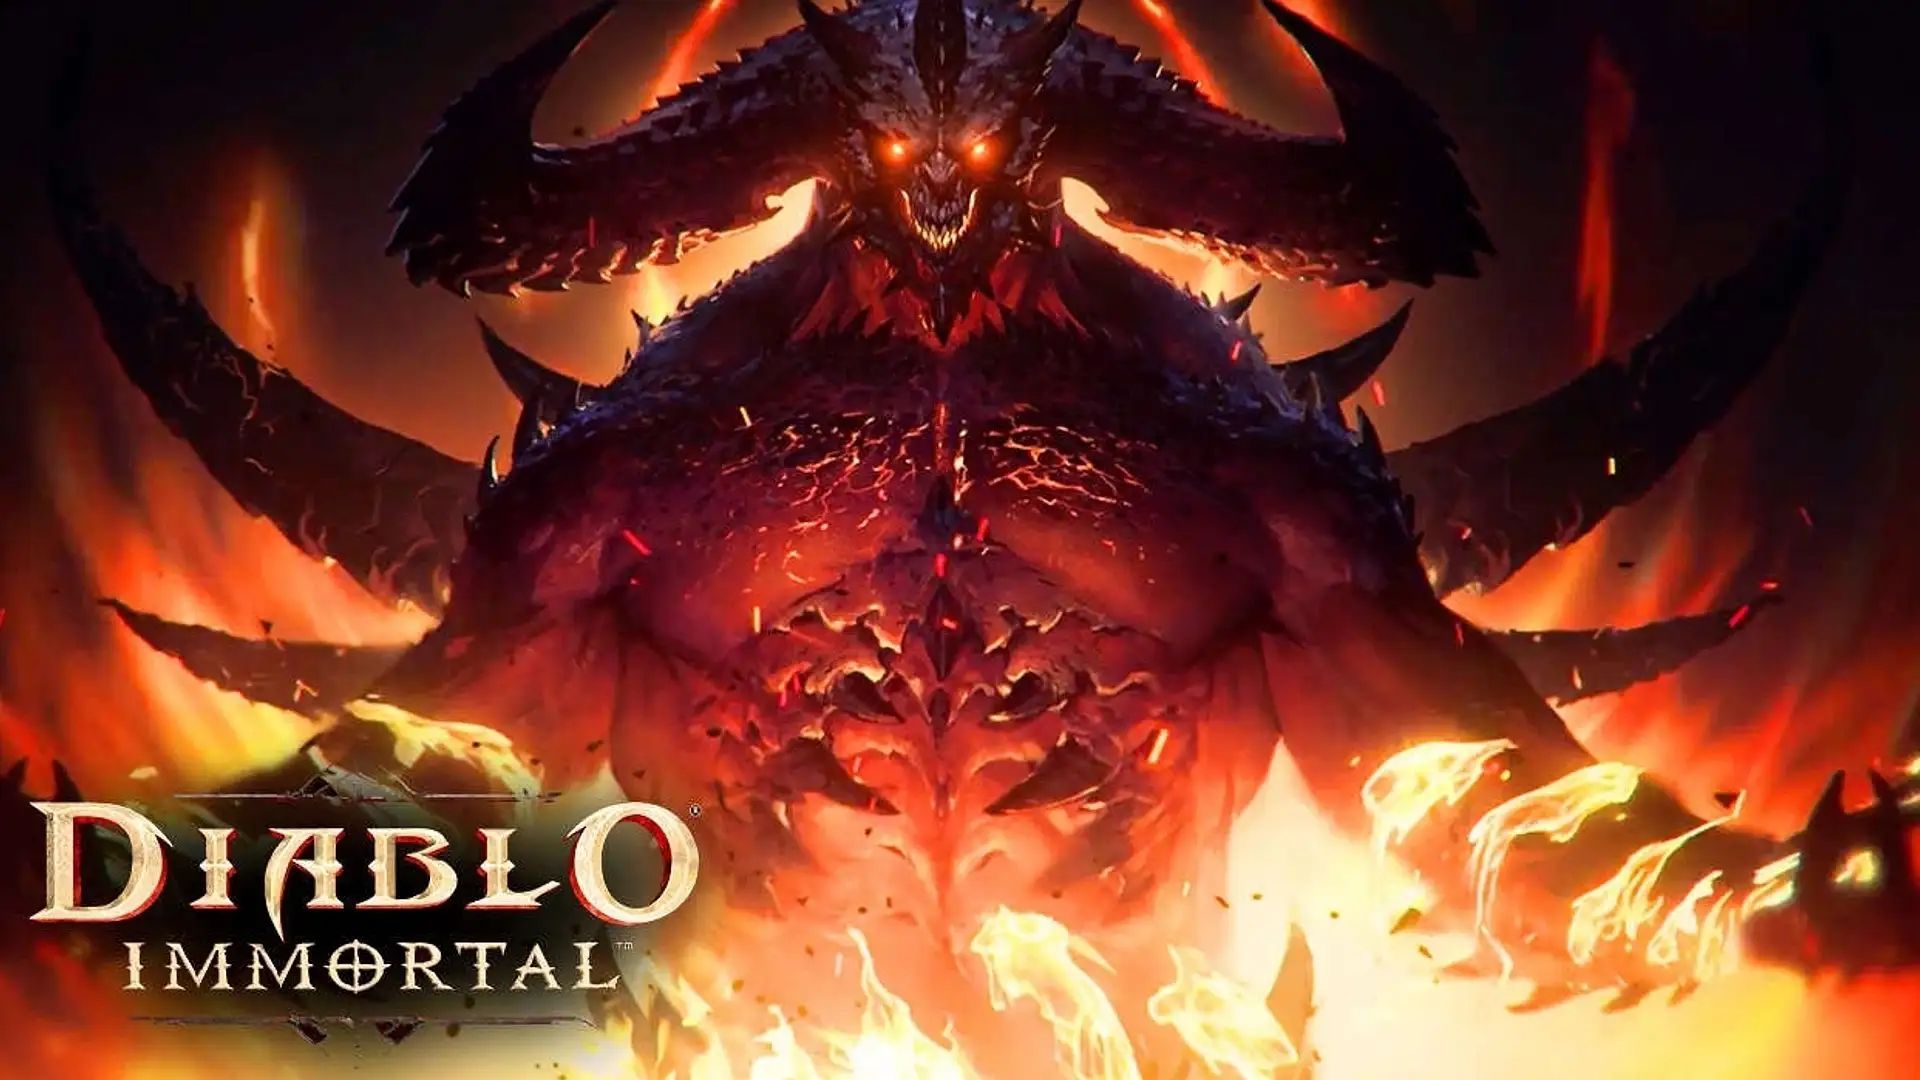 Diablo Immortal početkom lipnja, uz PC verziju